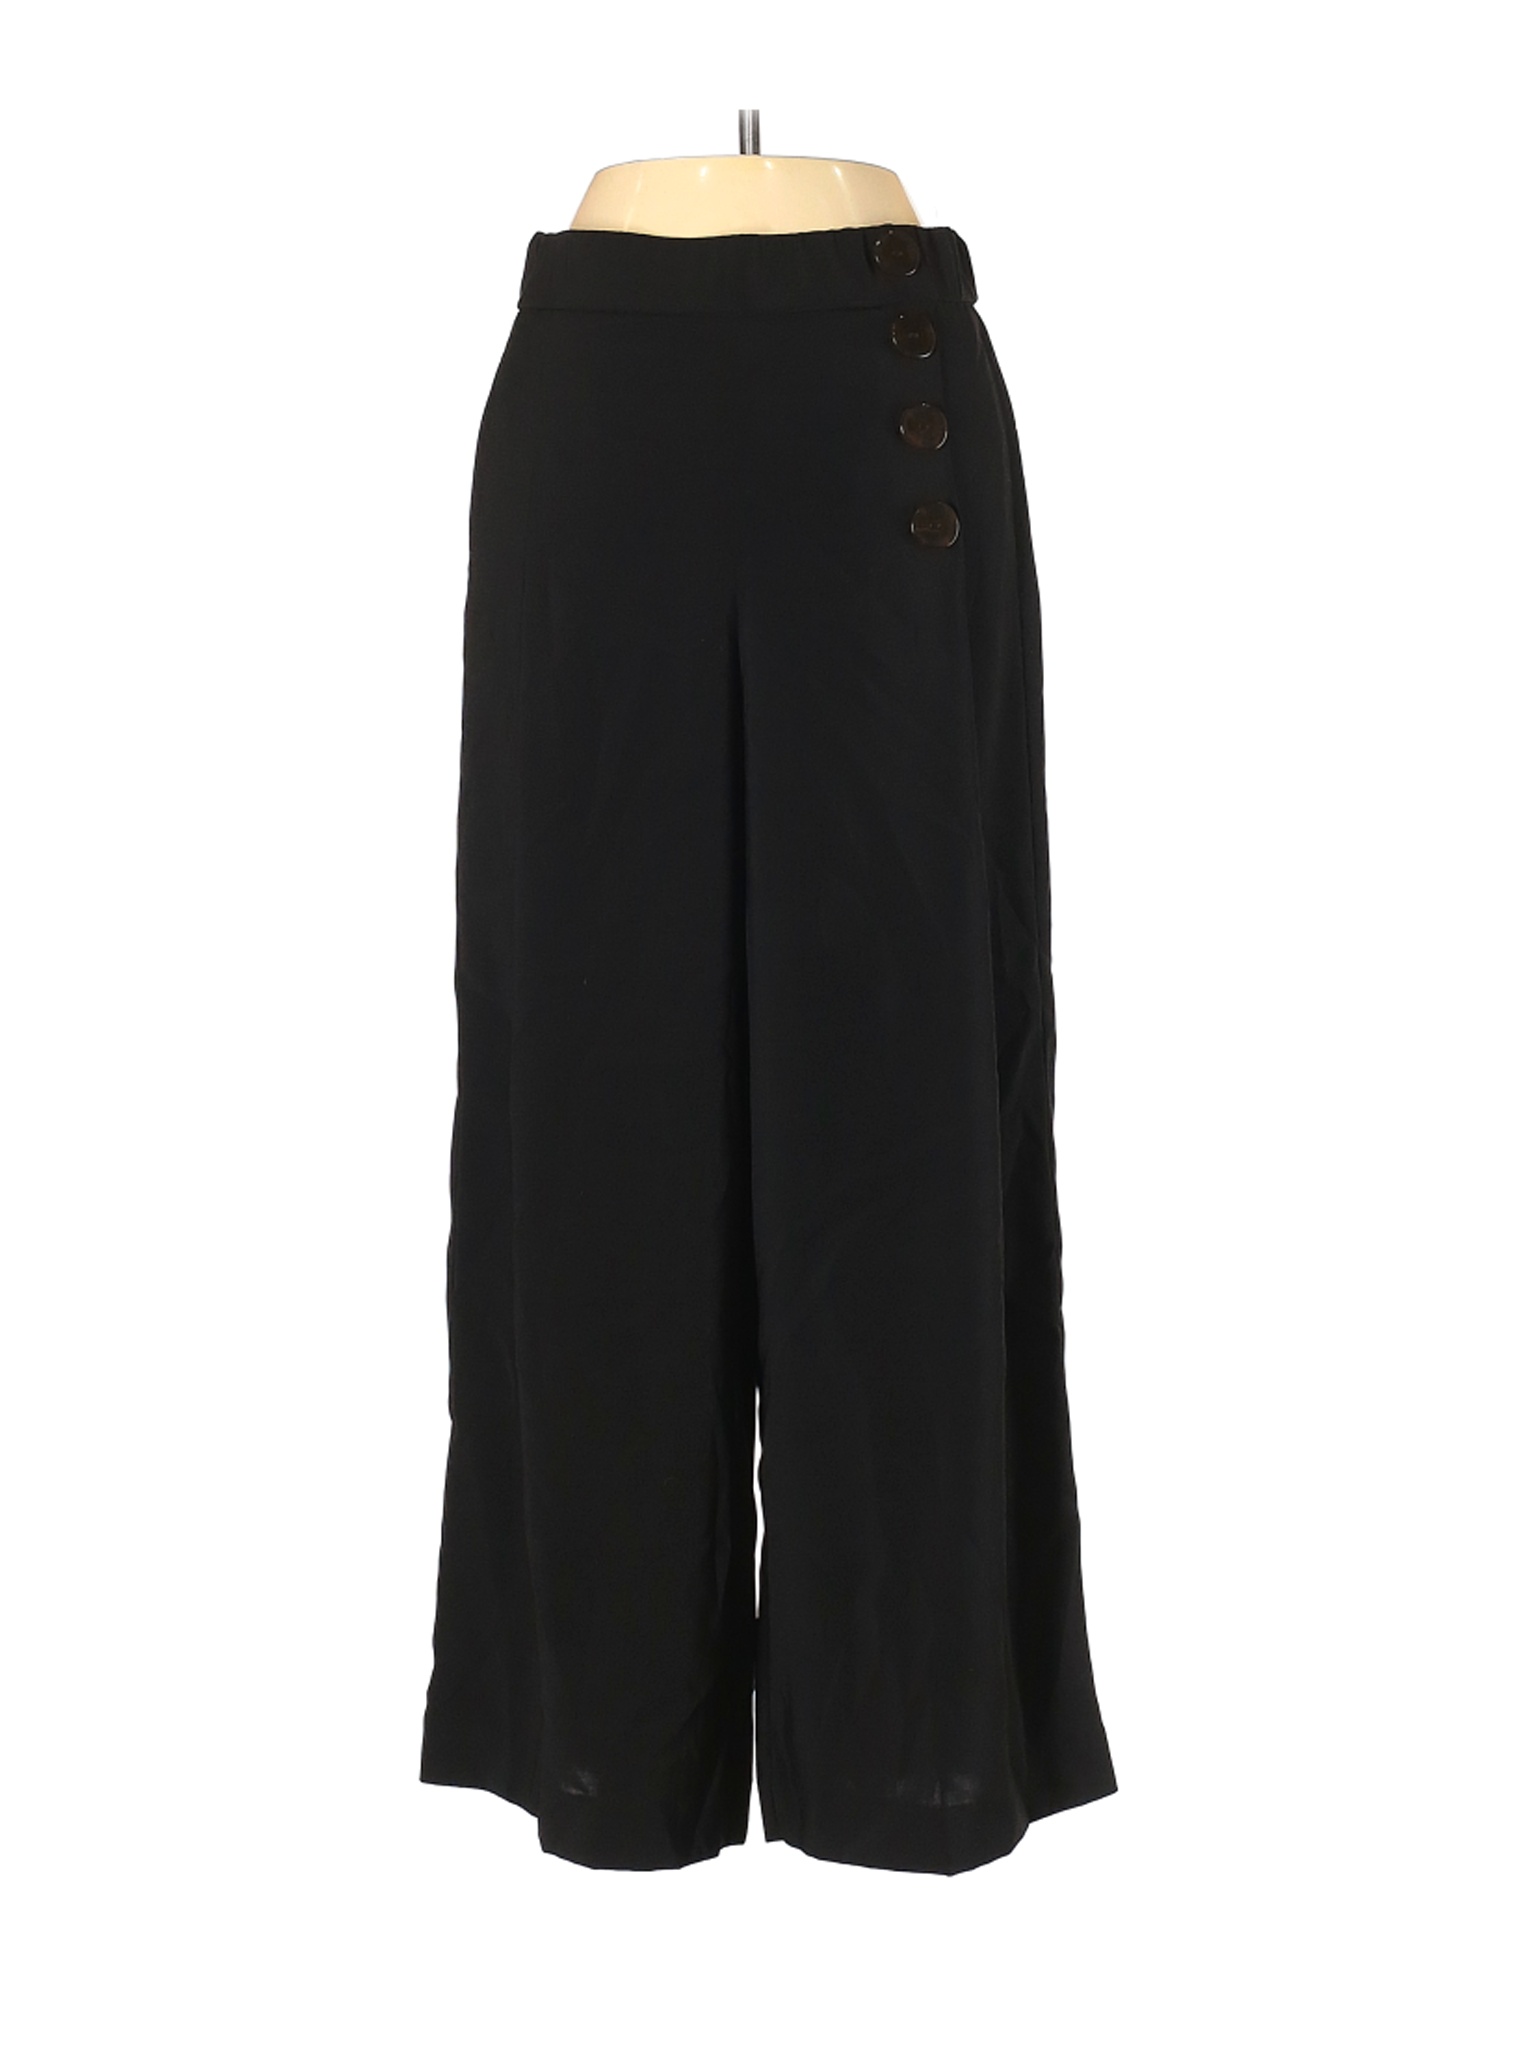 Zara Women Black Casual Pants XS | eBay